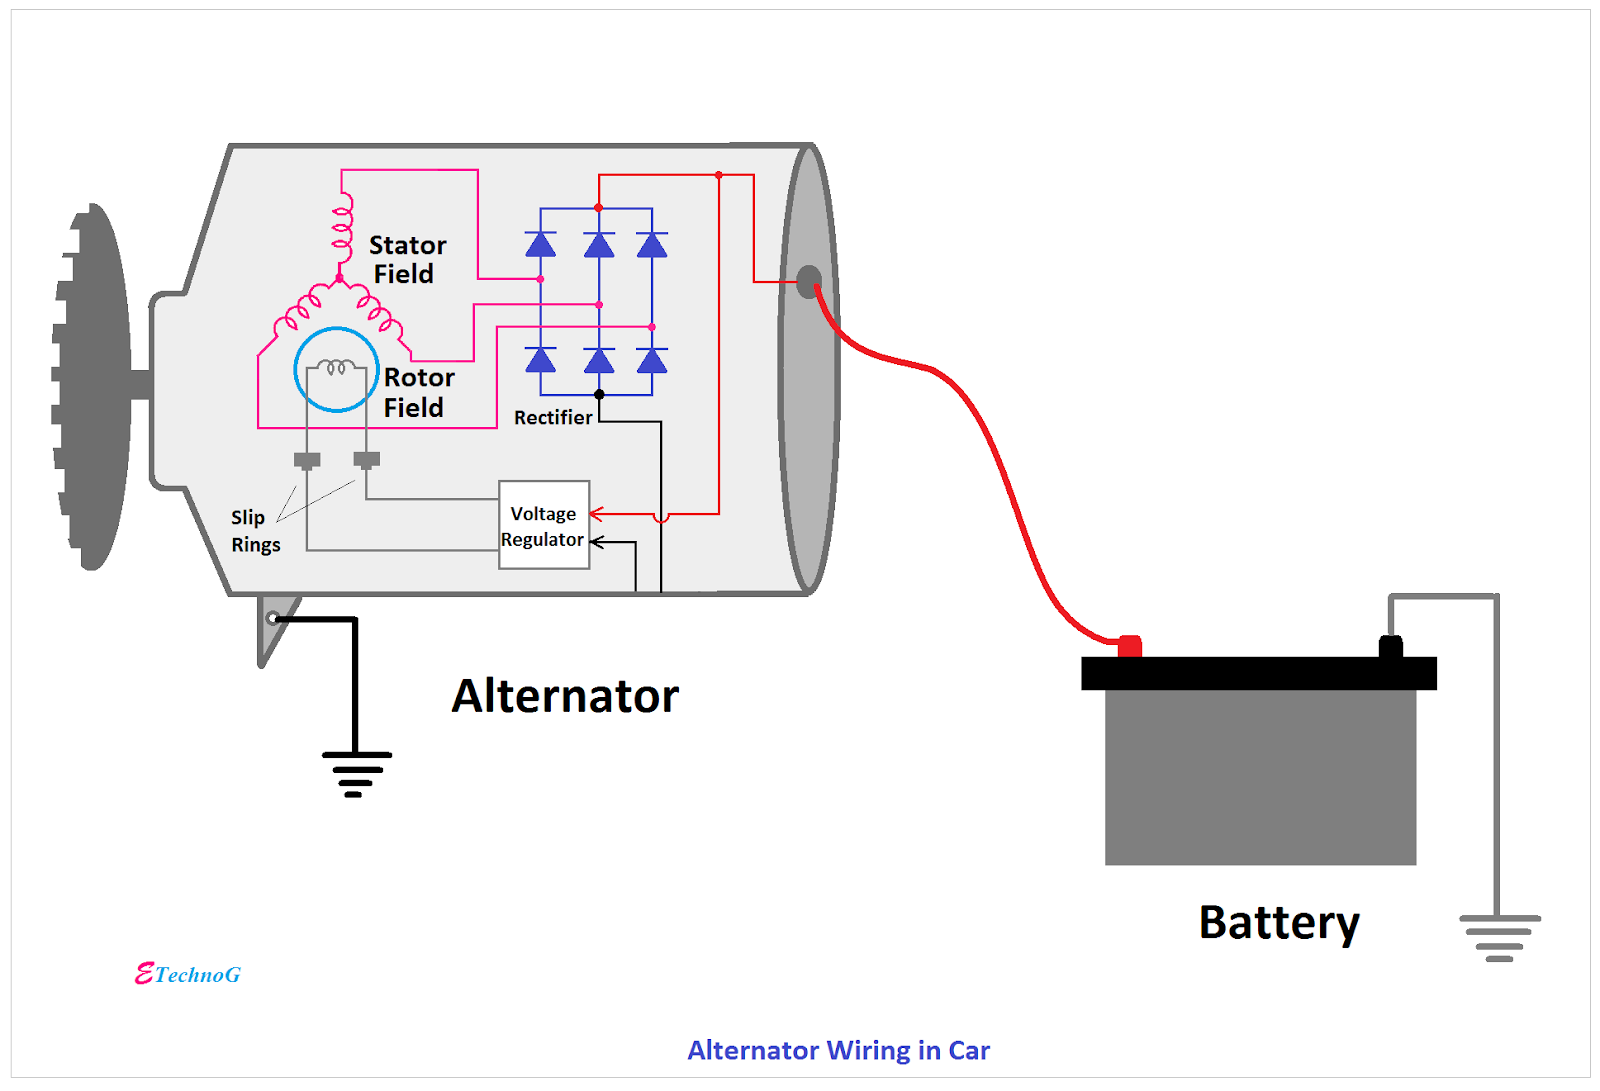 Alternator Function And Alternator Wiring Diagram In Car